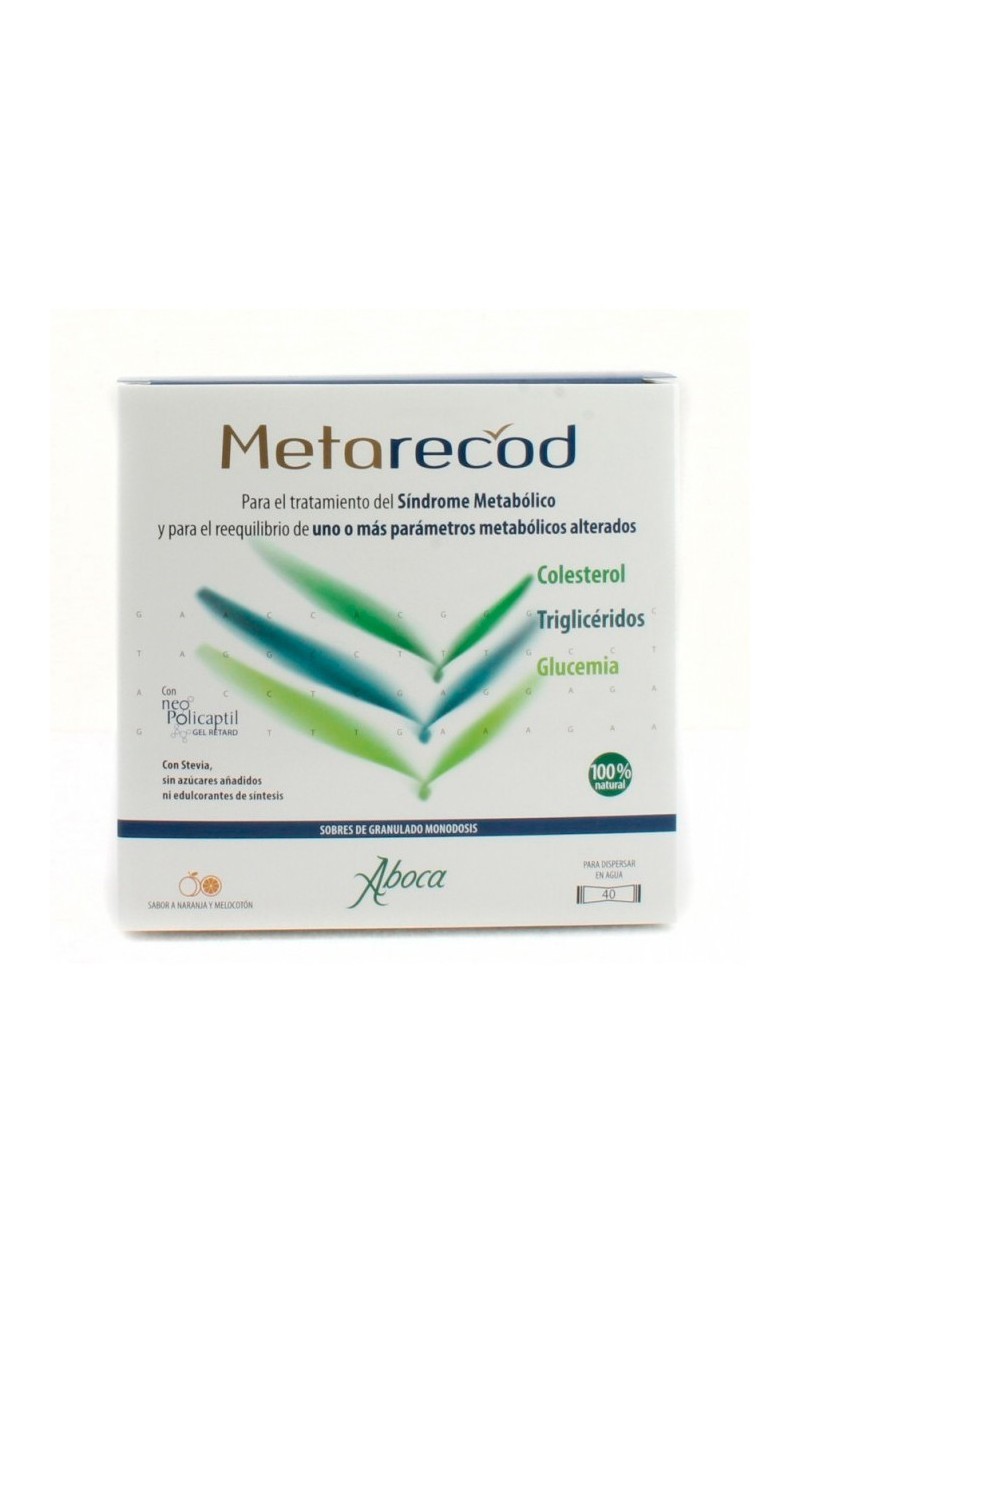 Aboca Metarecod 40 Envelopes